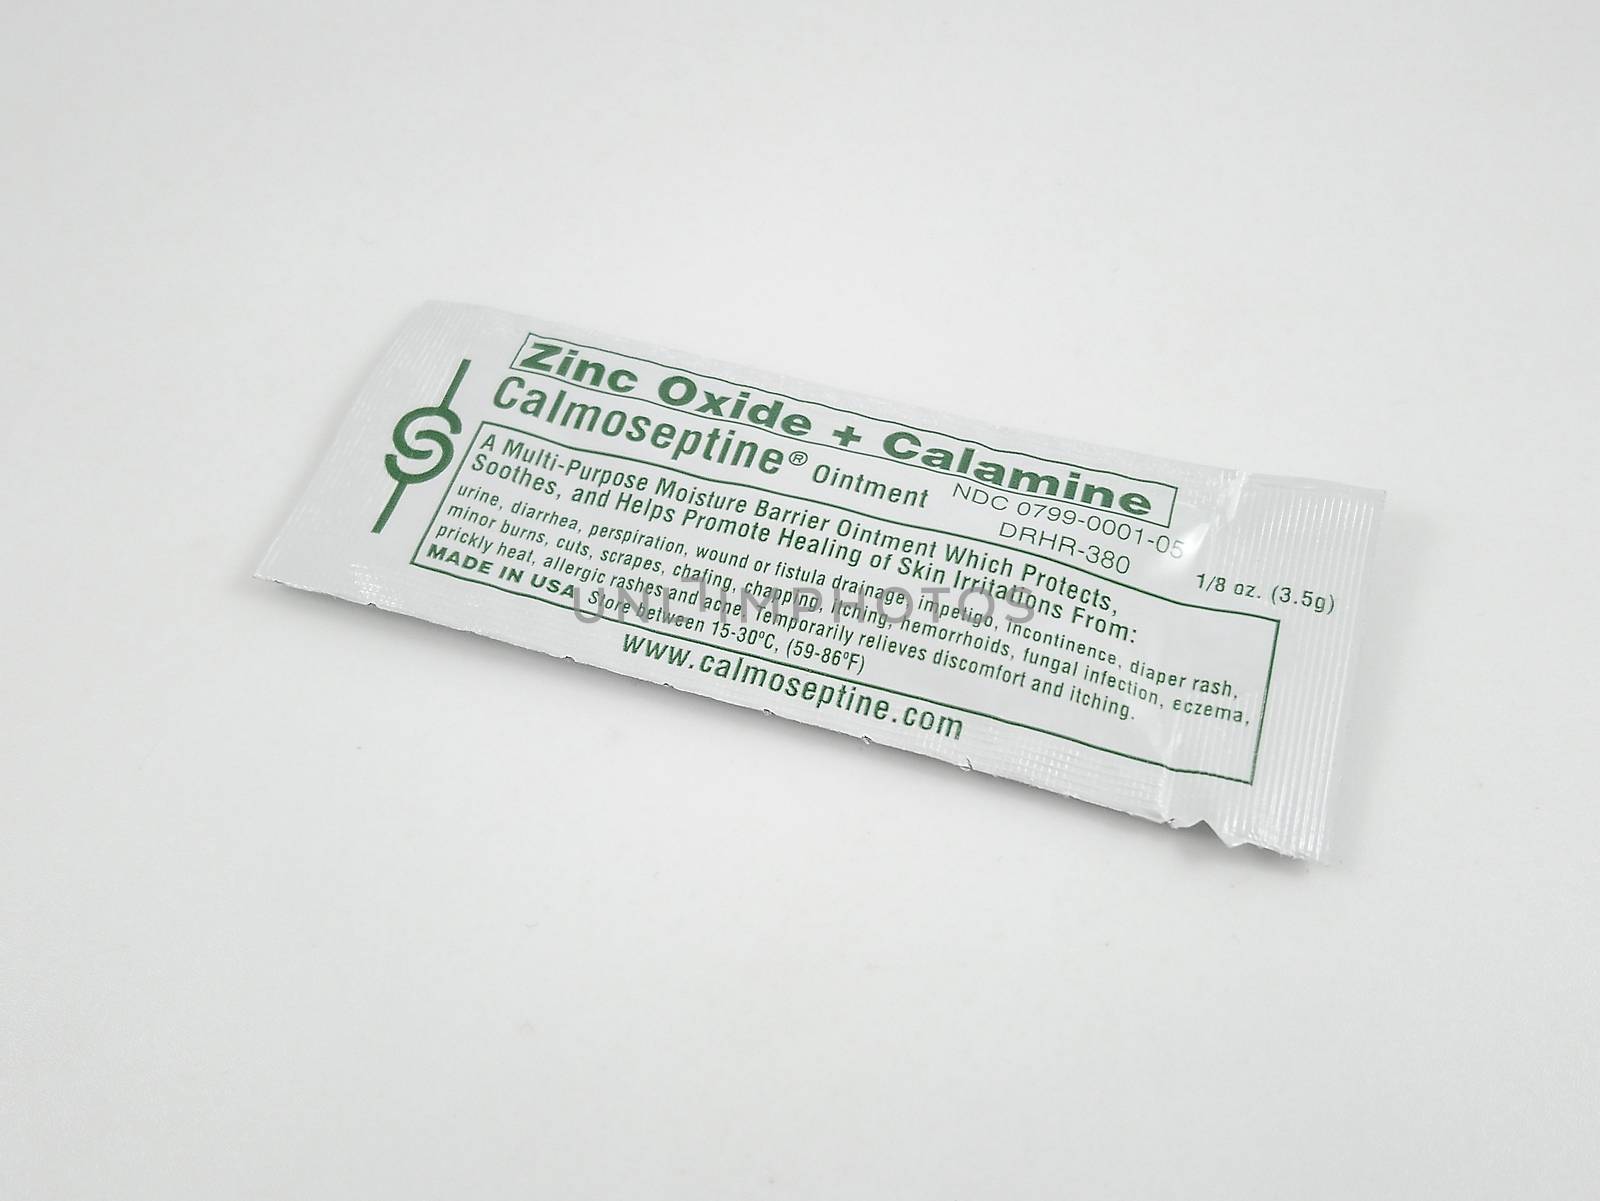 MANILA, PH - SEPT 25 - Zinc oxide plus calamine calmoseptine ointment on September 25, 2020 in Manila, Philippines.